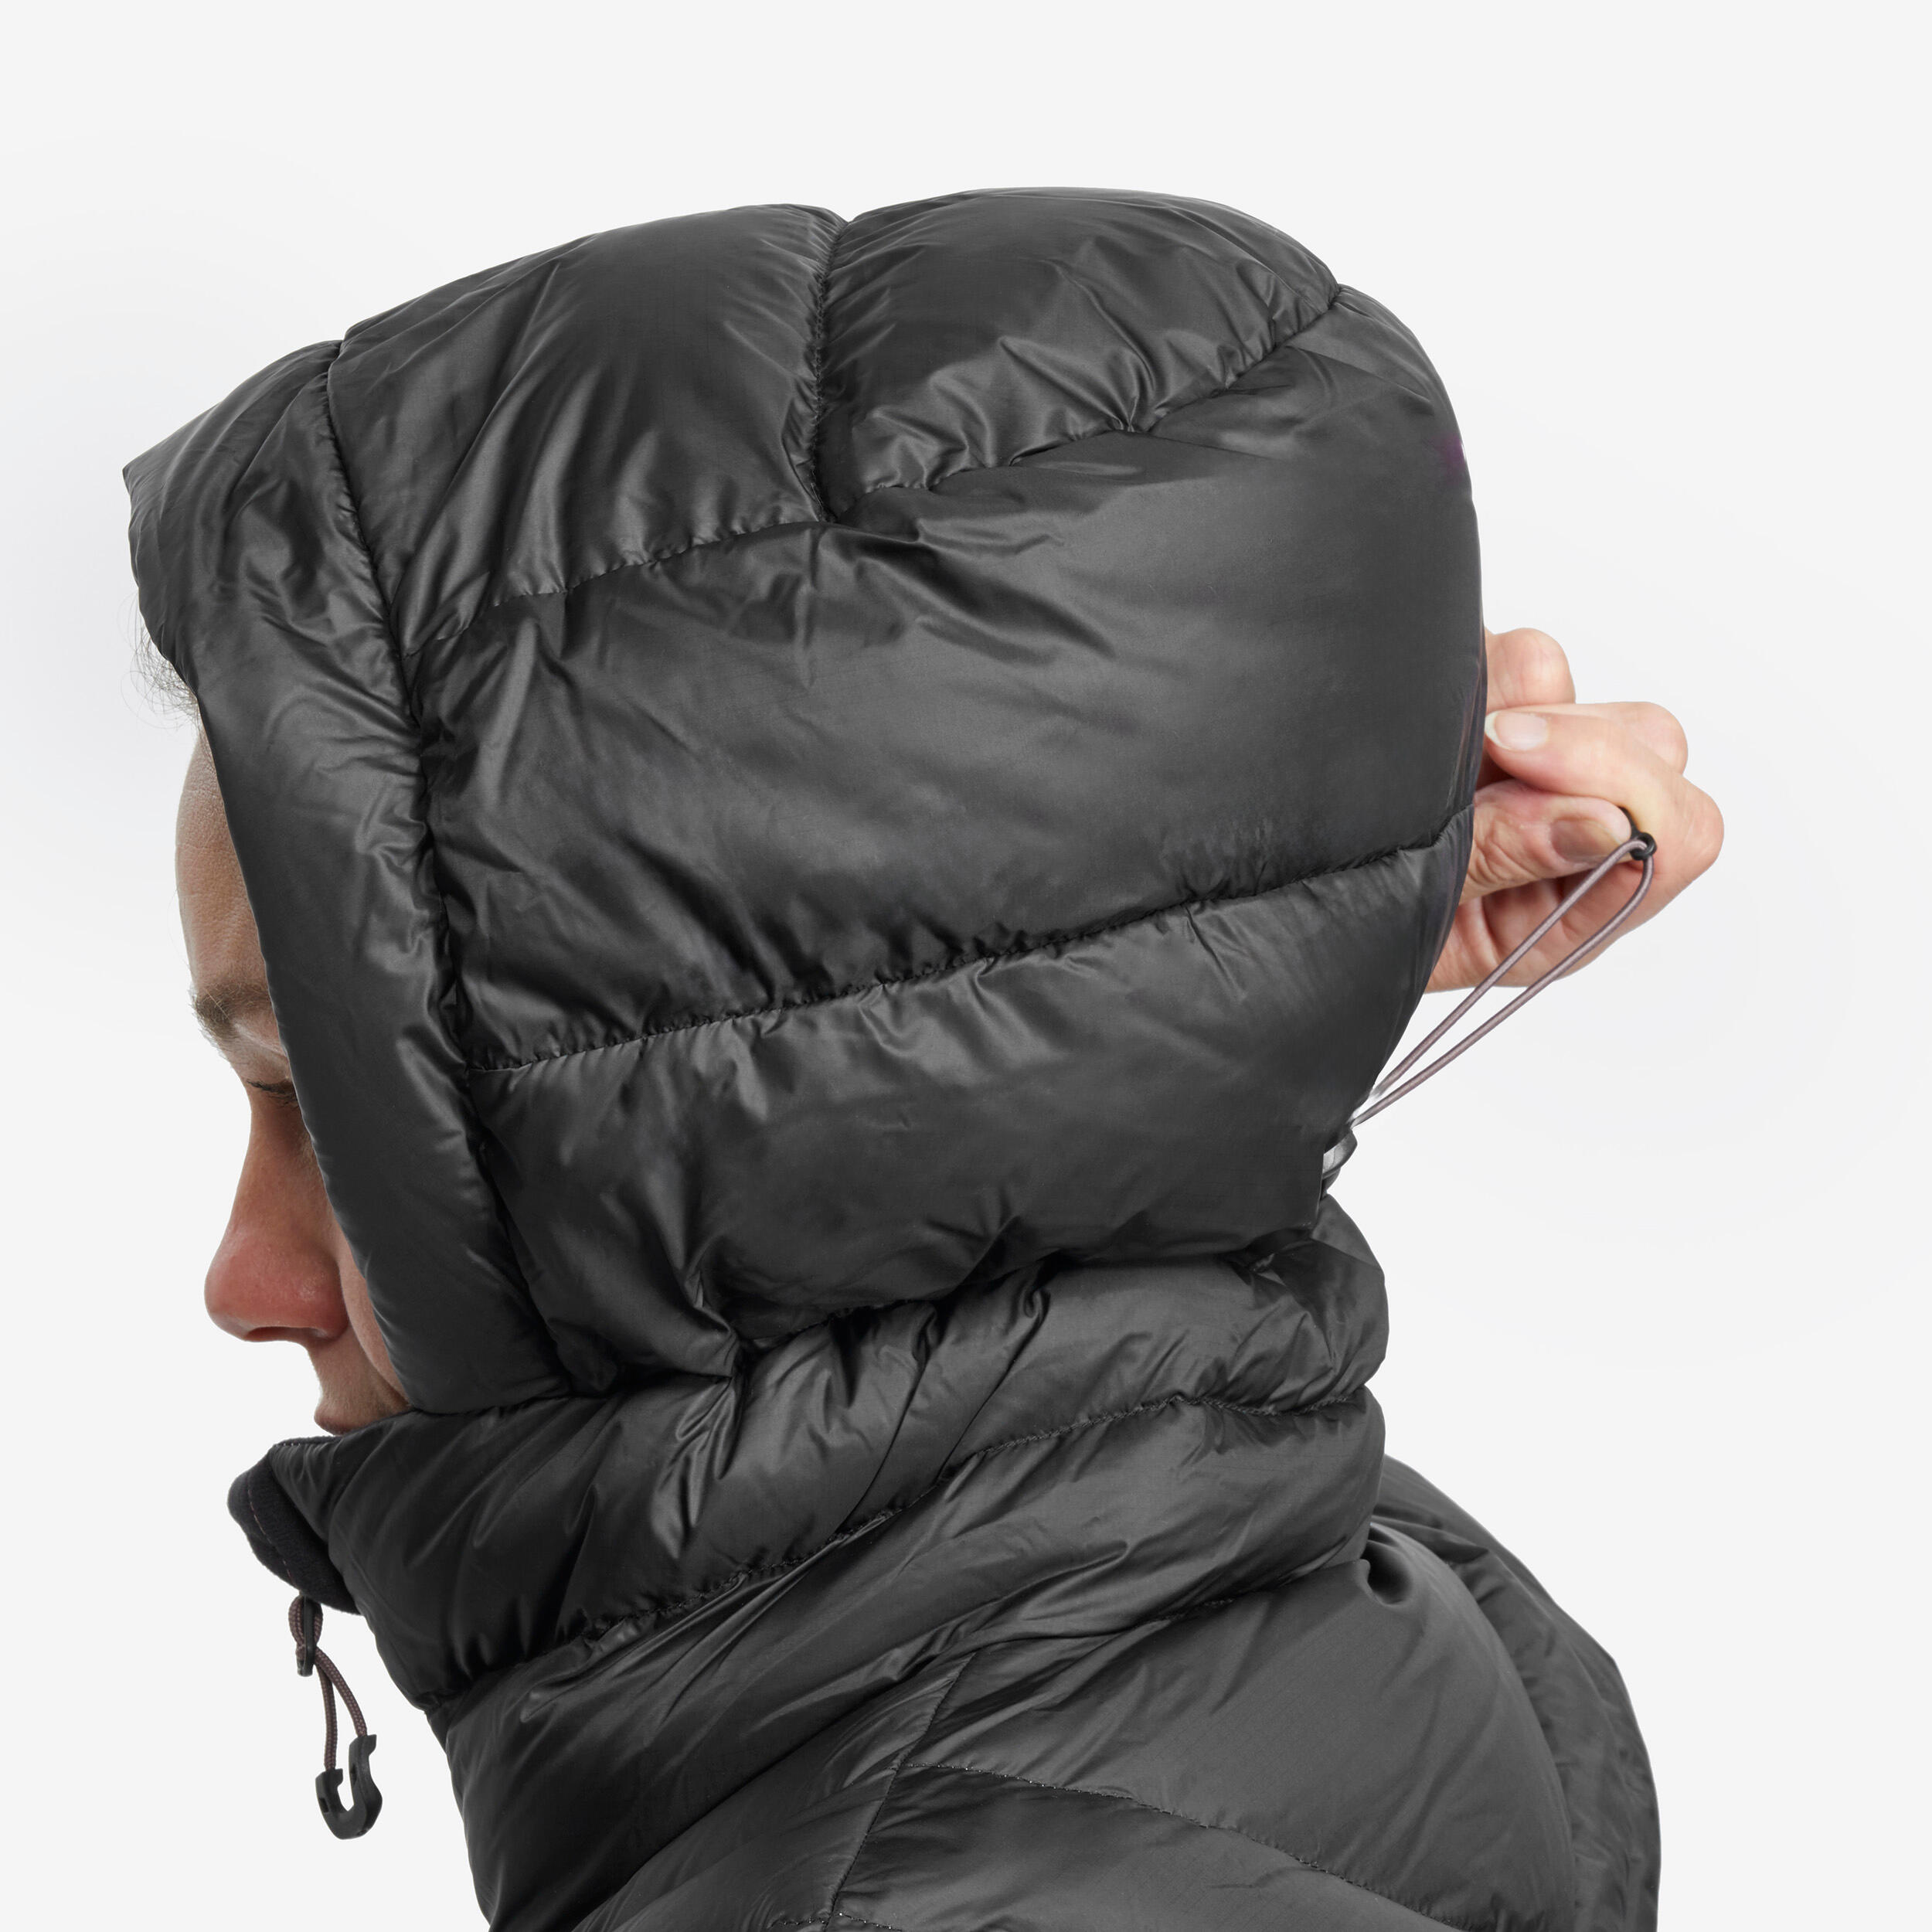 Women’s mountain trekking hooded down jacket - MT500 -10°C 10/11